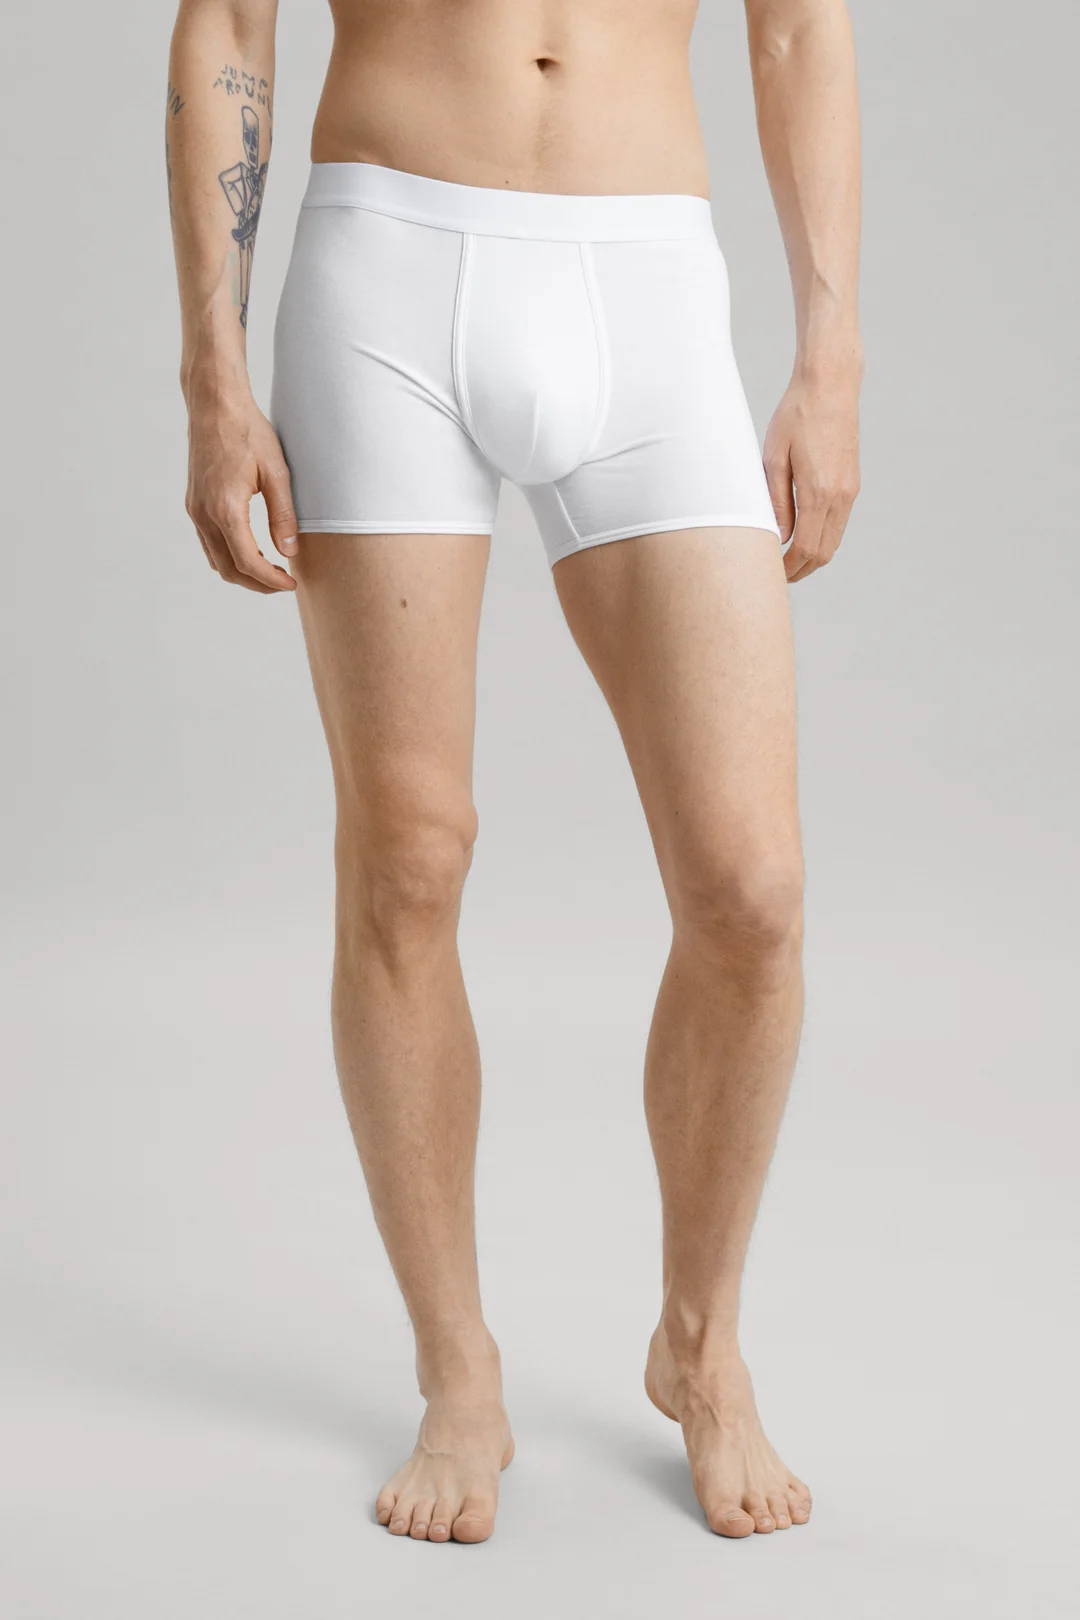 Custom Photo Men's Underwear Personalized Face Lebanon